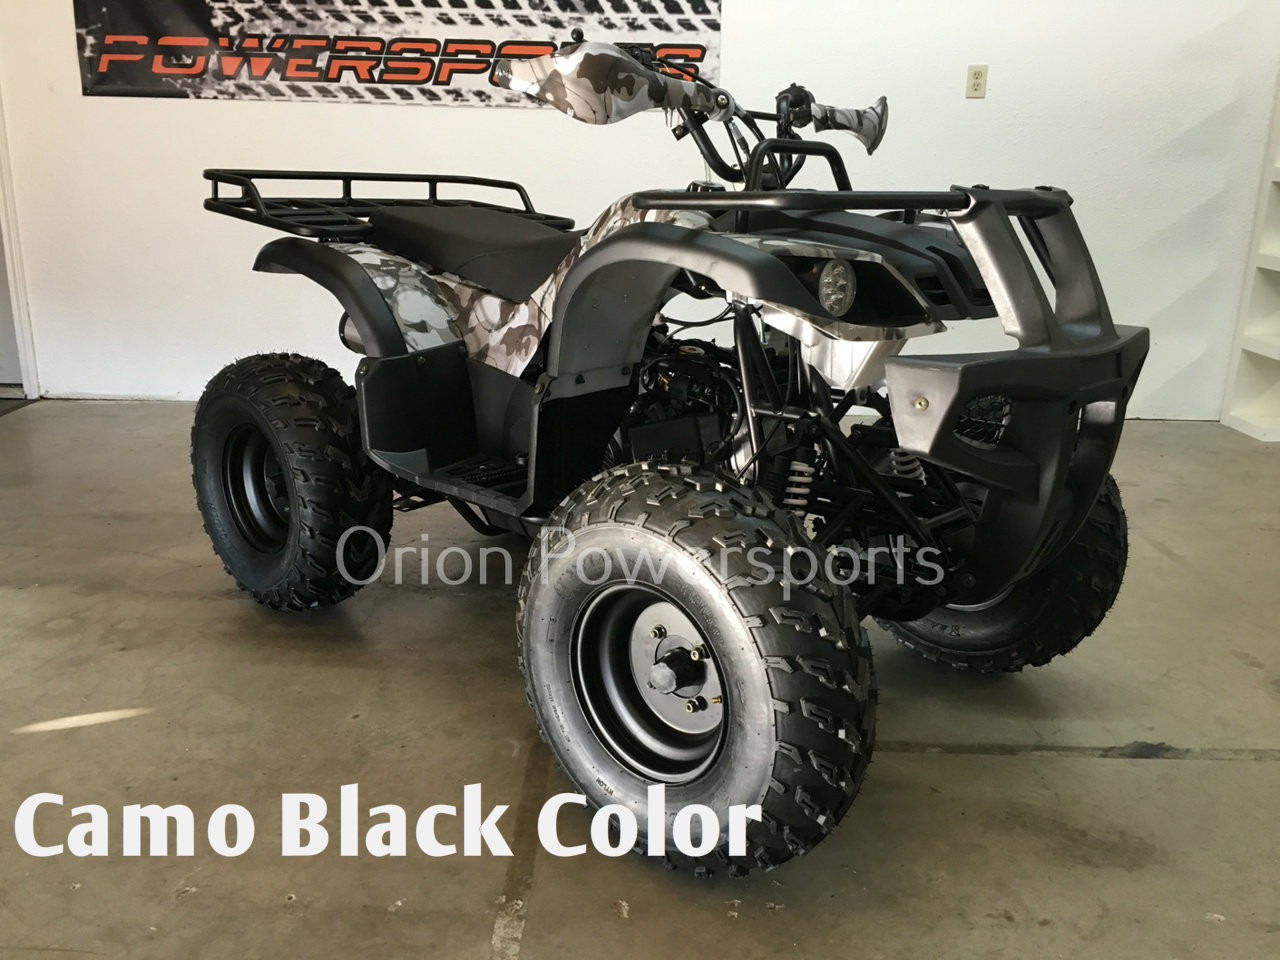 Orion ATV 150cc Utility-Hunting, Adult ATV, Affordable ATV, for sale, Assembled ATV